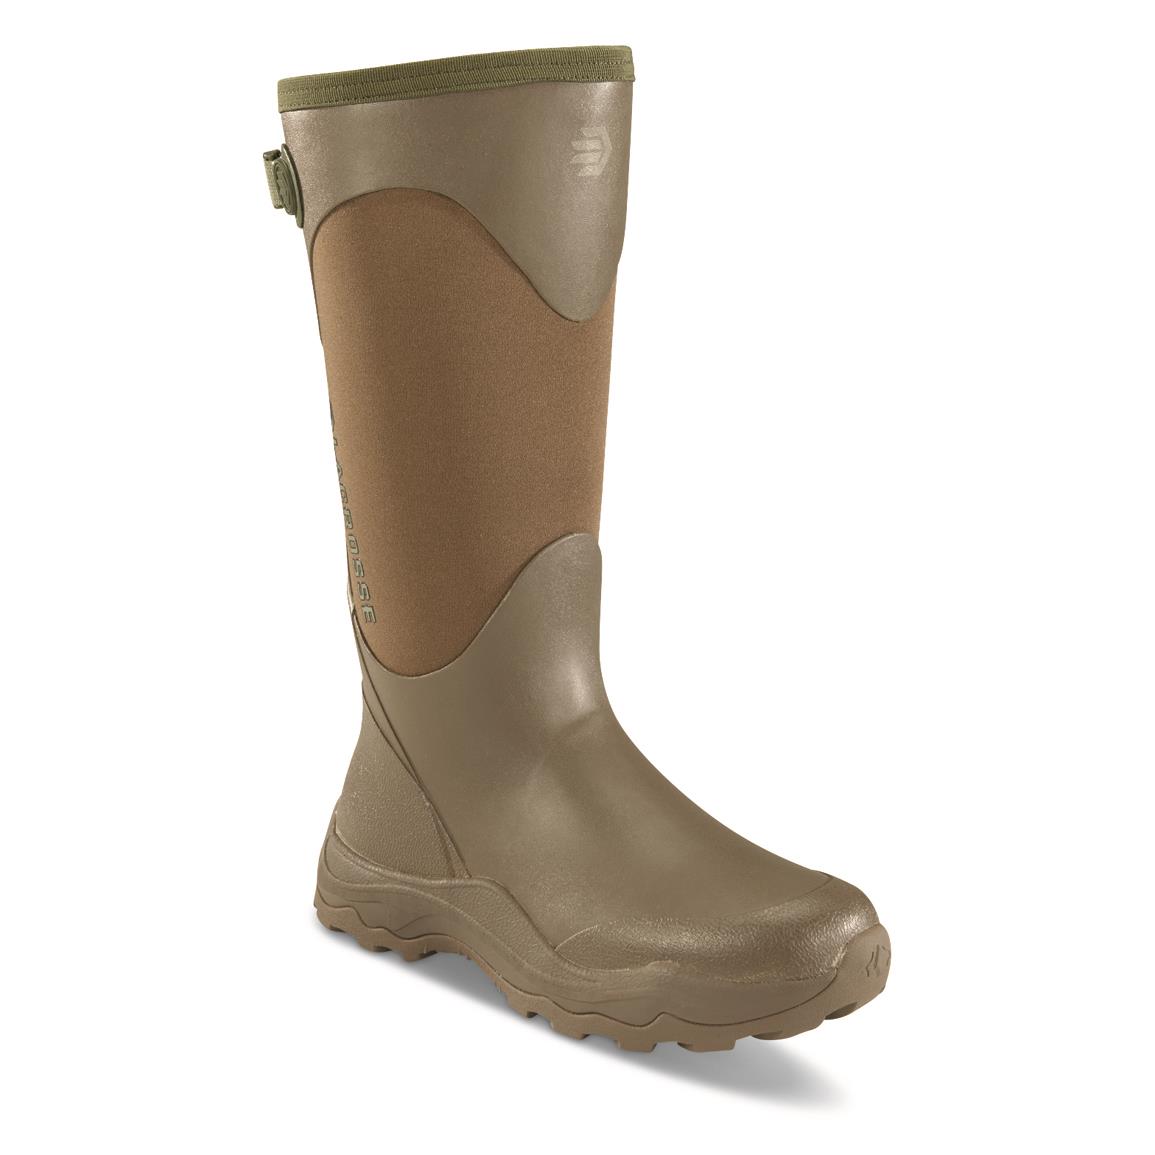 LaCrosse Women's 15" Alpha Agility Waterproof Rubber Hunting Boots, Brown/Green